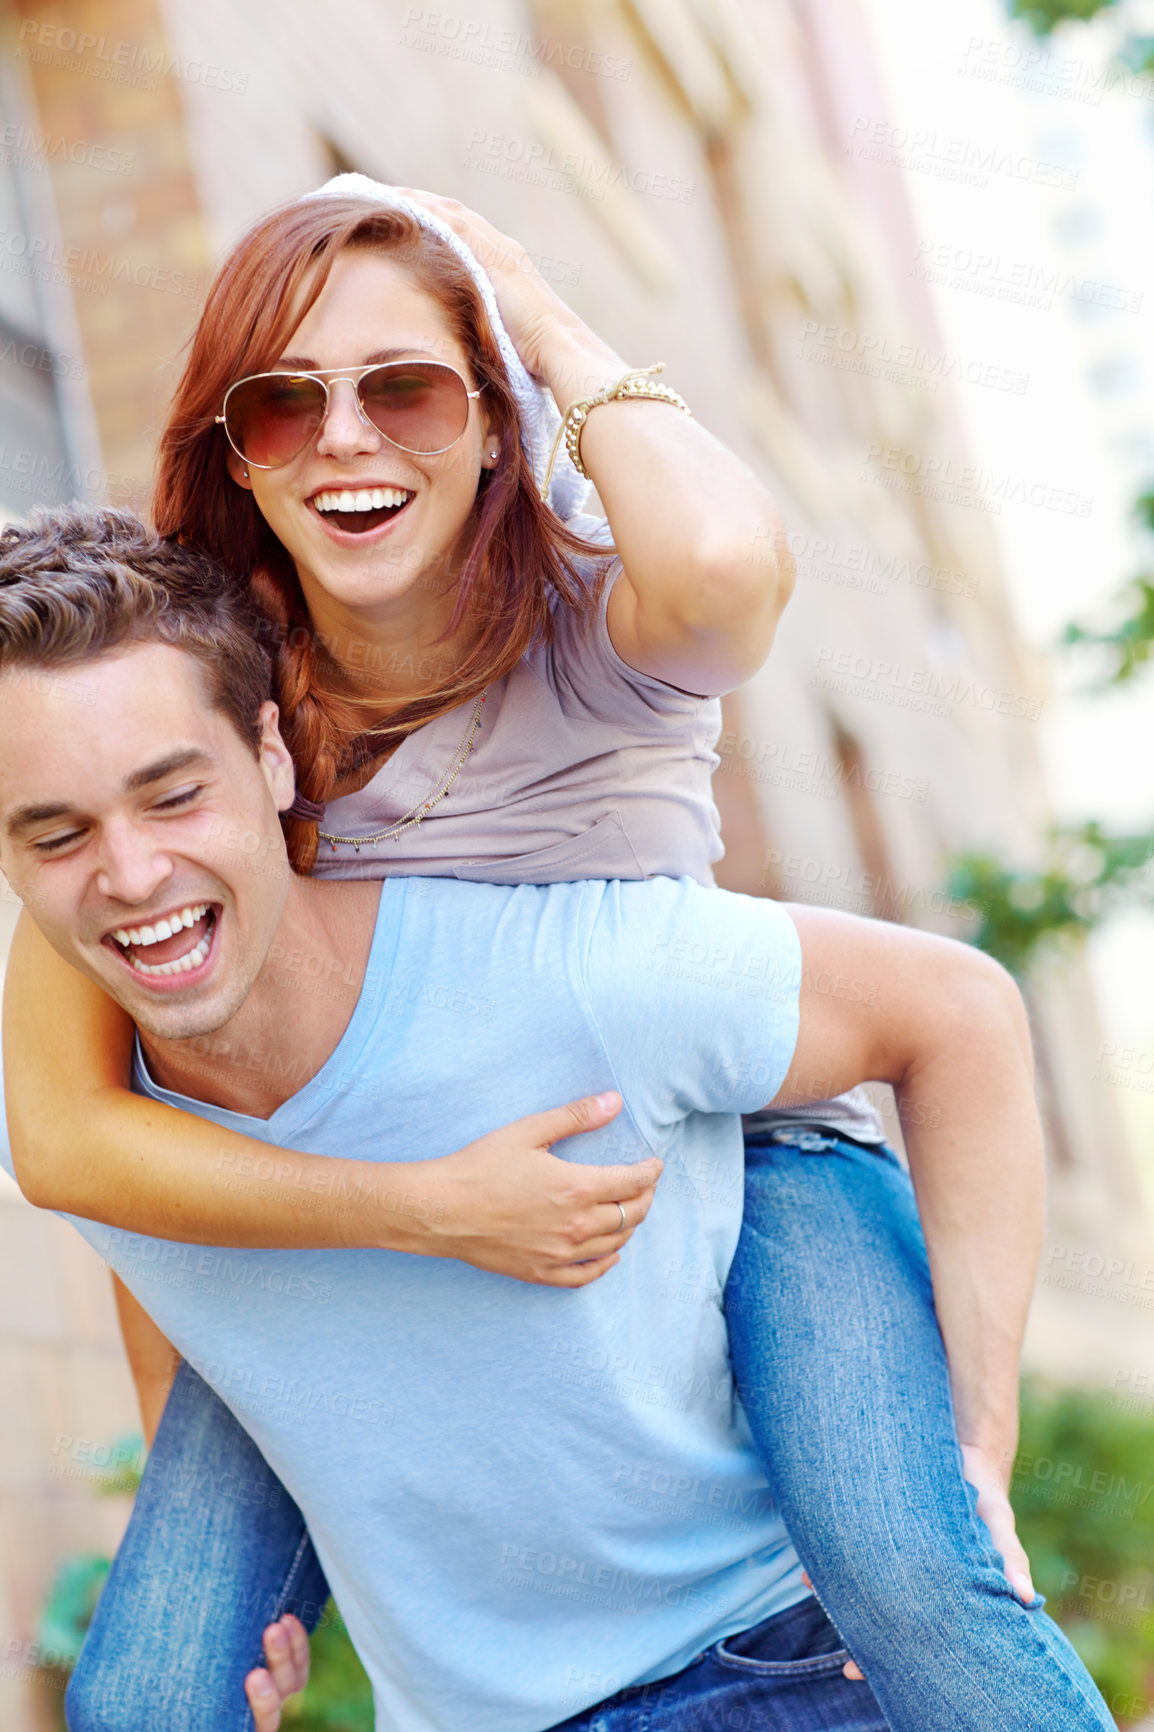 Buy stock photo A happy girlfriend getting a piggyback from her boyfriend